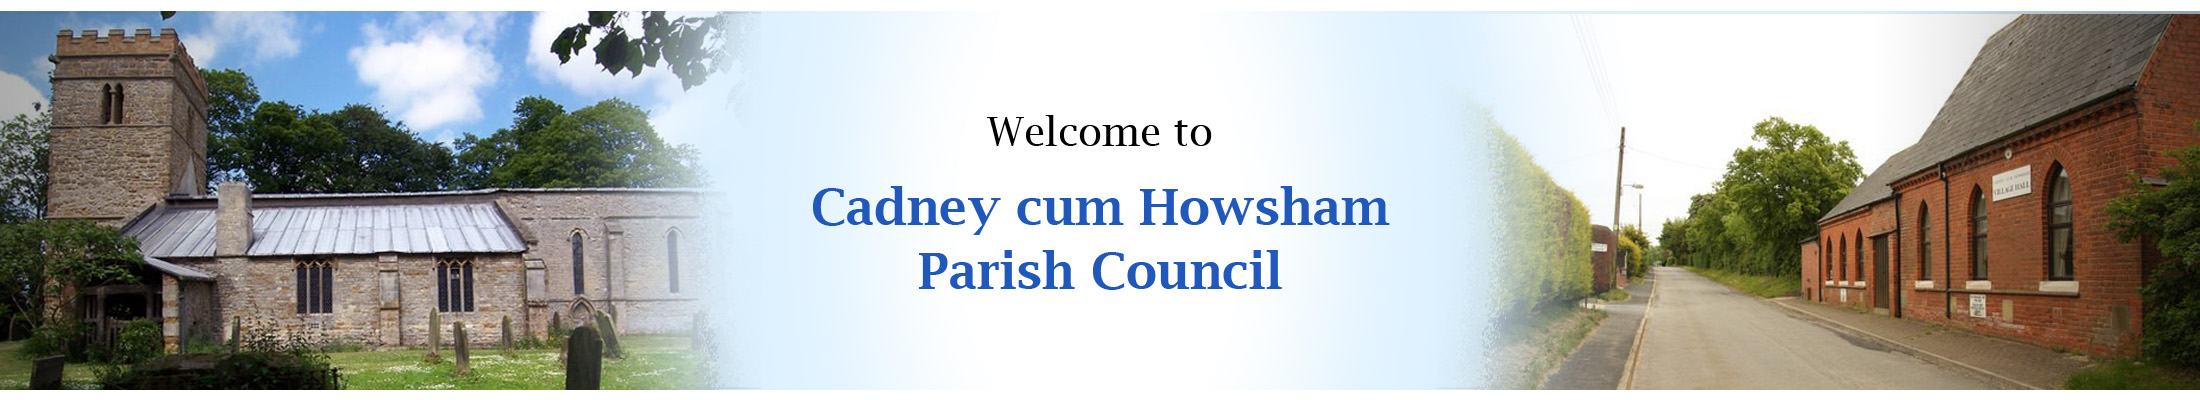 Header Image for Cadney Cum Howsham Parish Council